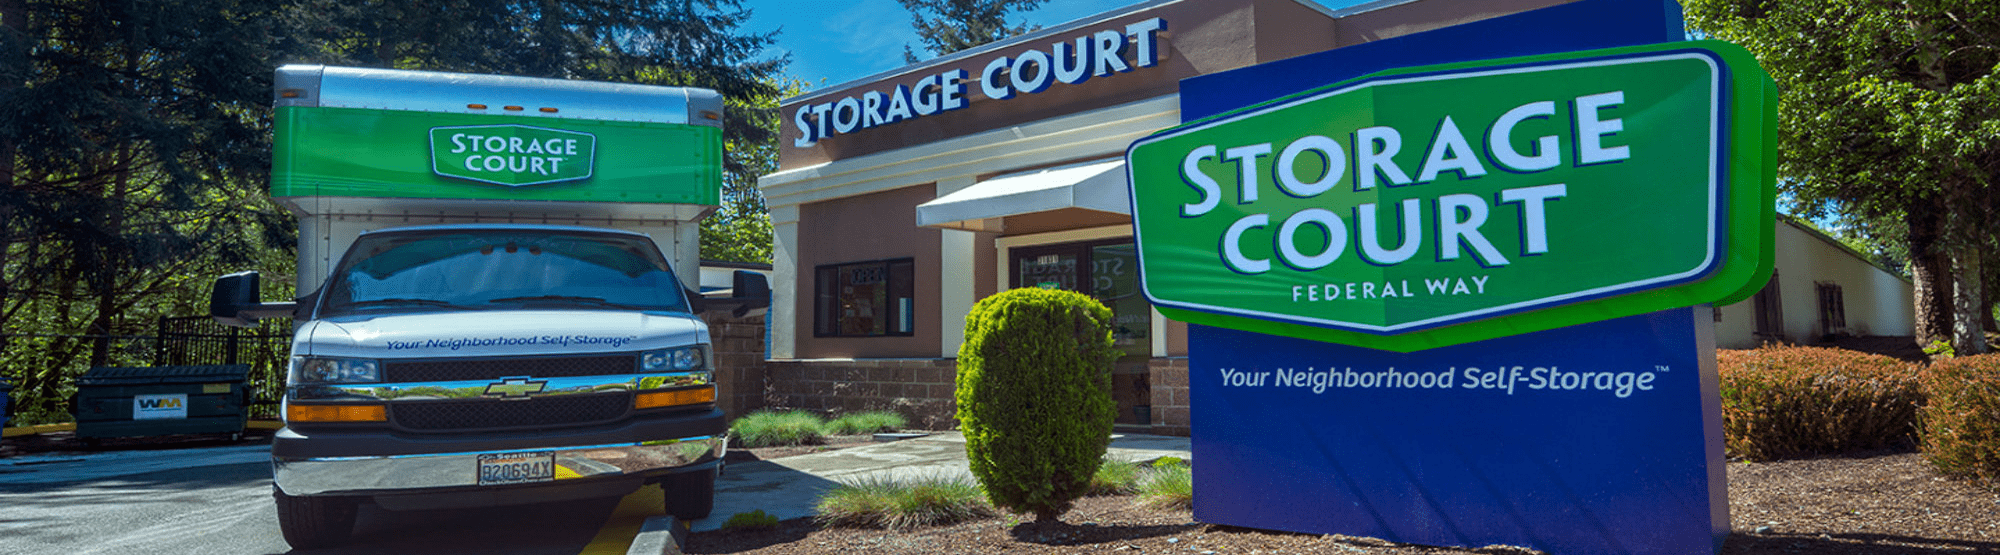 Washington Self Storage Facilities Storage Court